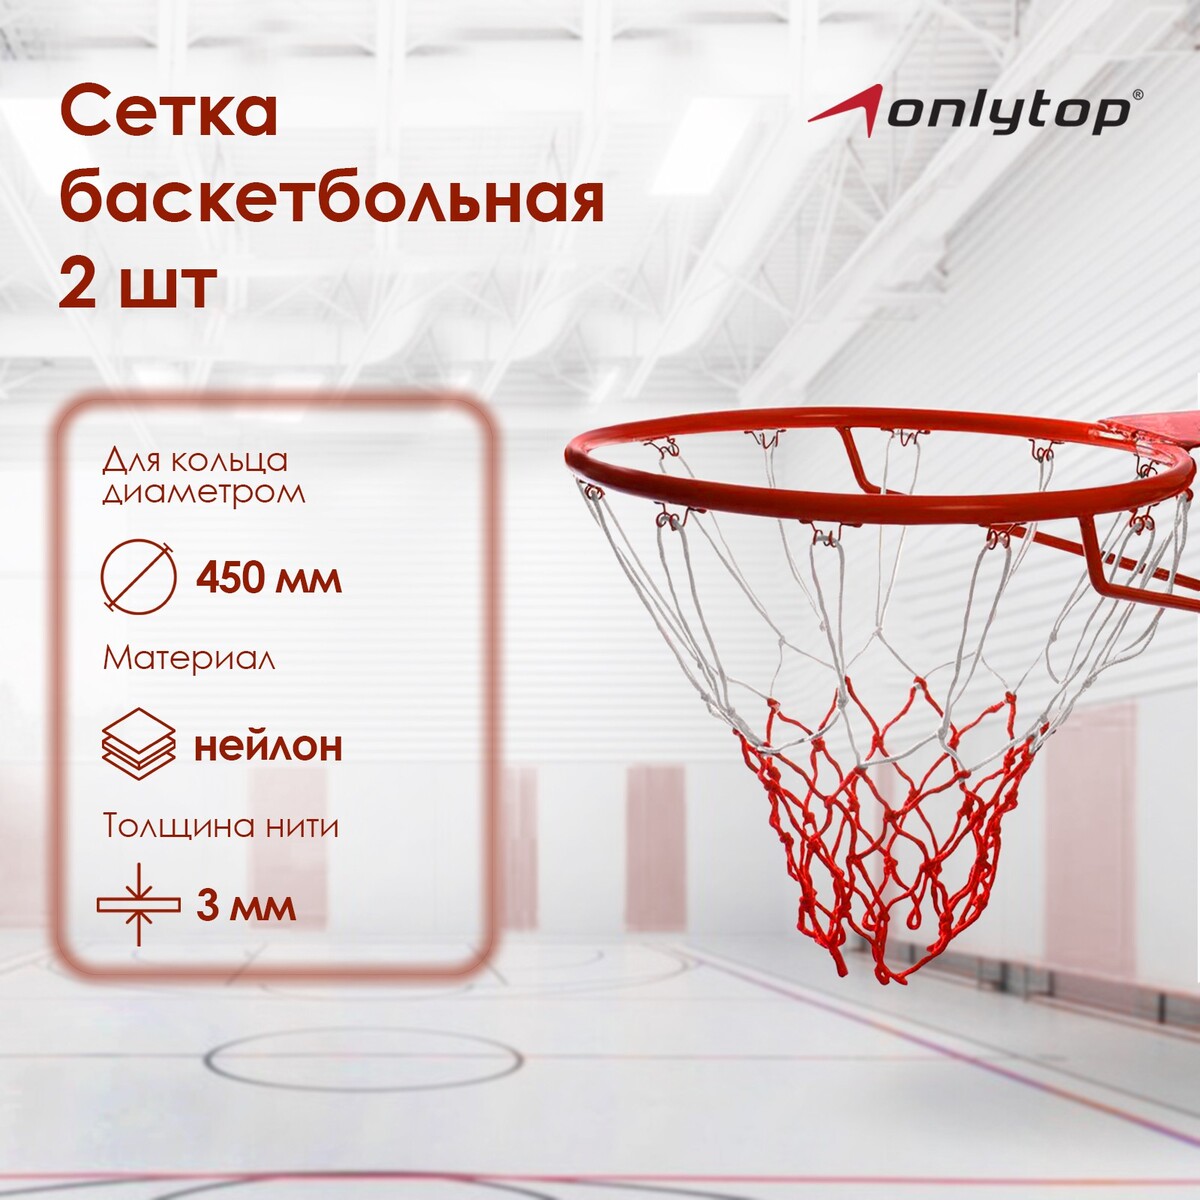 Сетка баскетбольная onlytop, 50 см, нить 3 мм, 2 шт. сетка баскетбольная onlytop 50 см нить 3 мм 2 шт